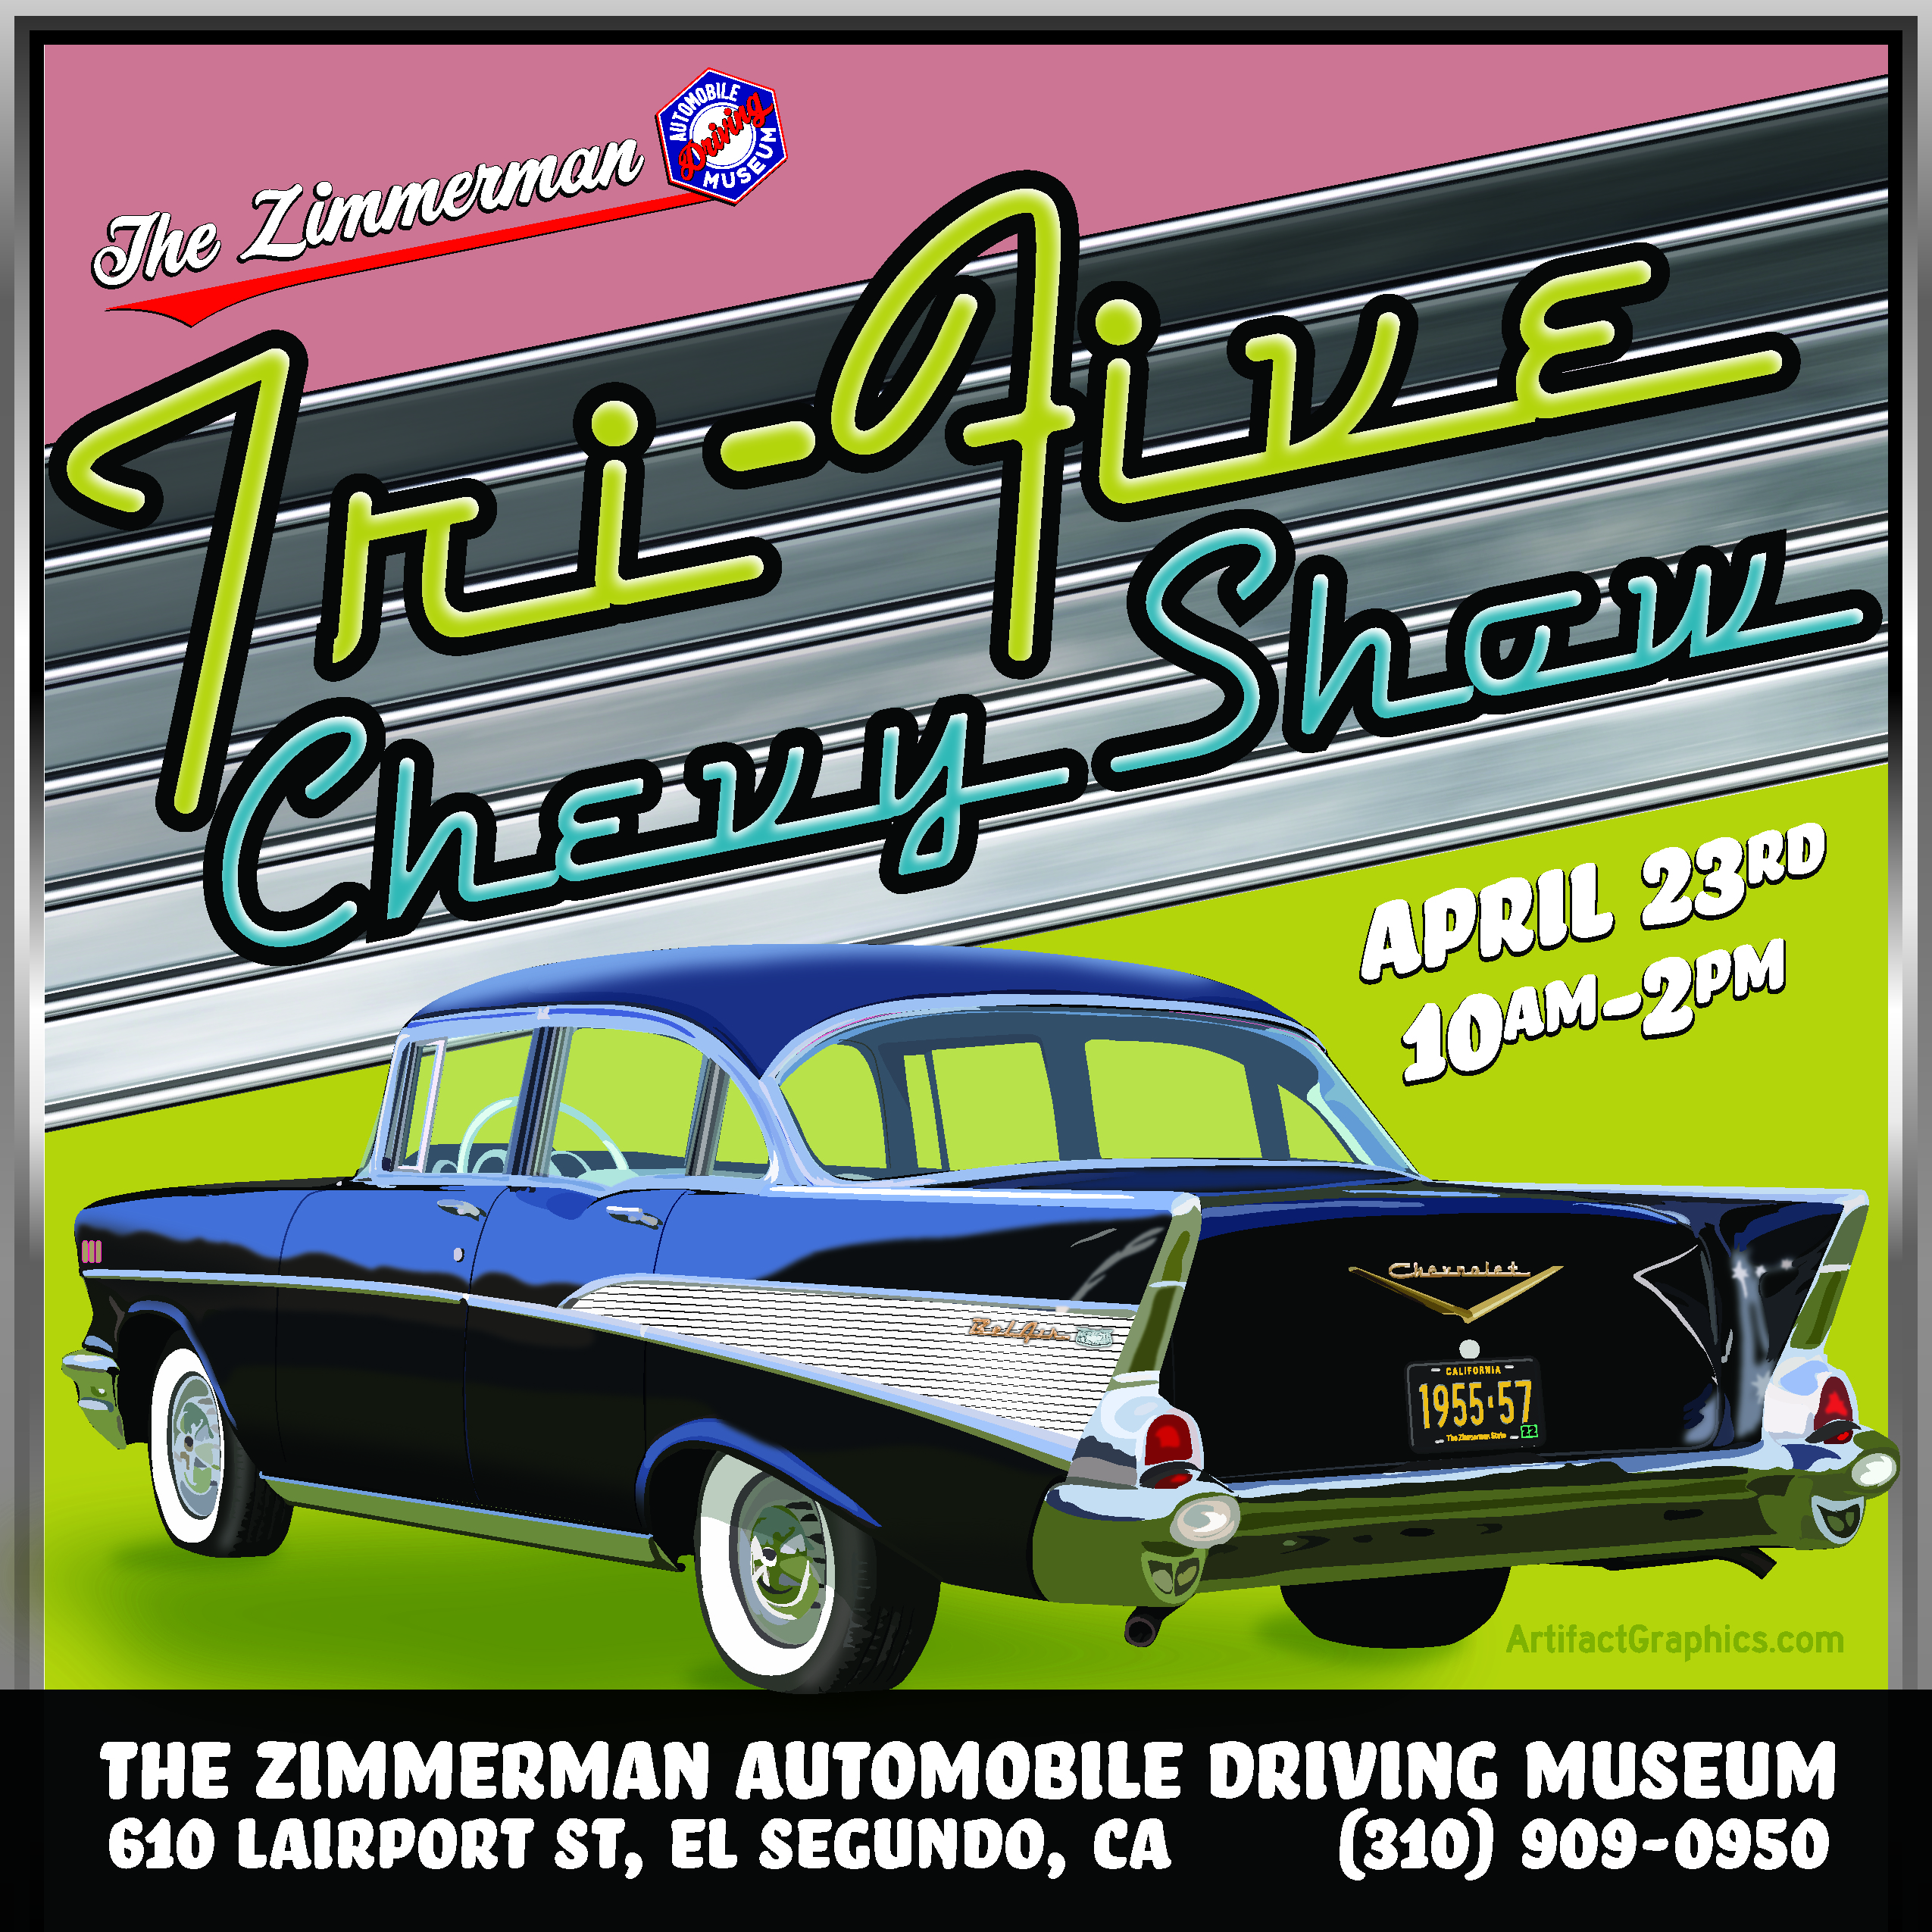 TriFive Chevy Car Show